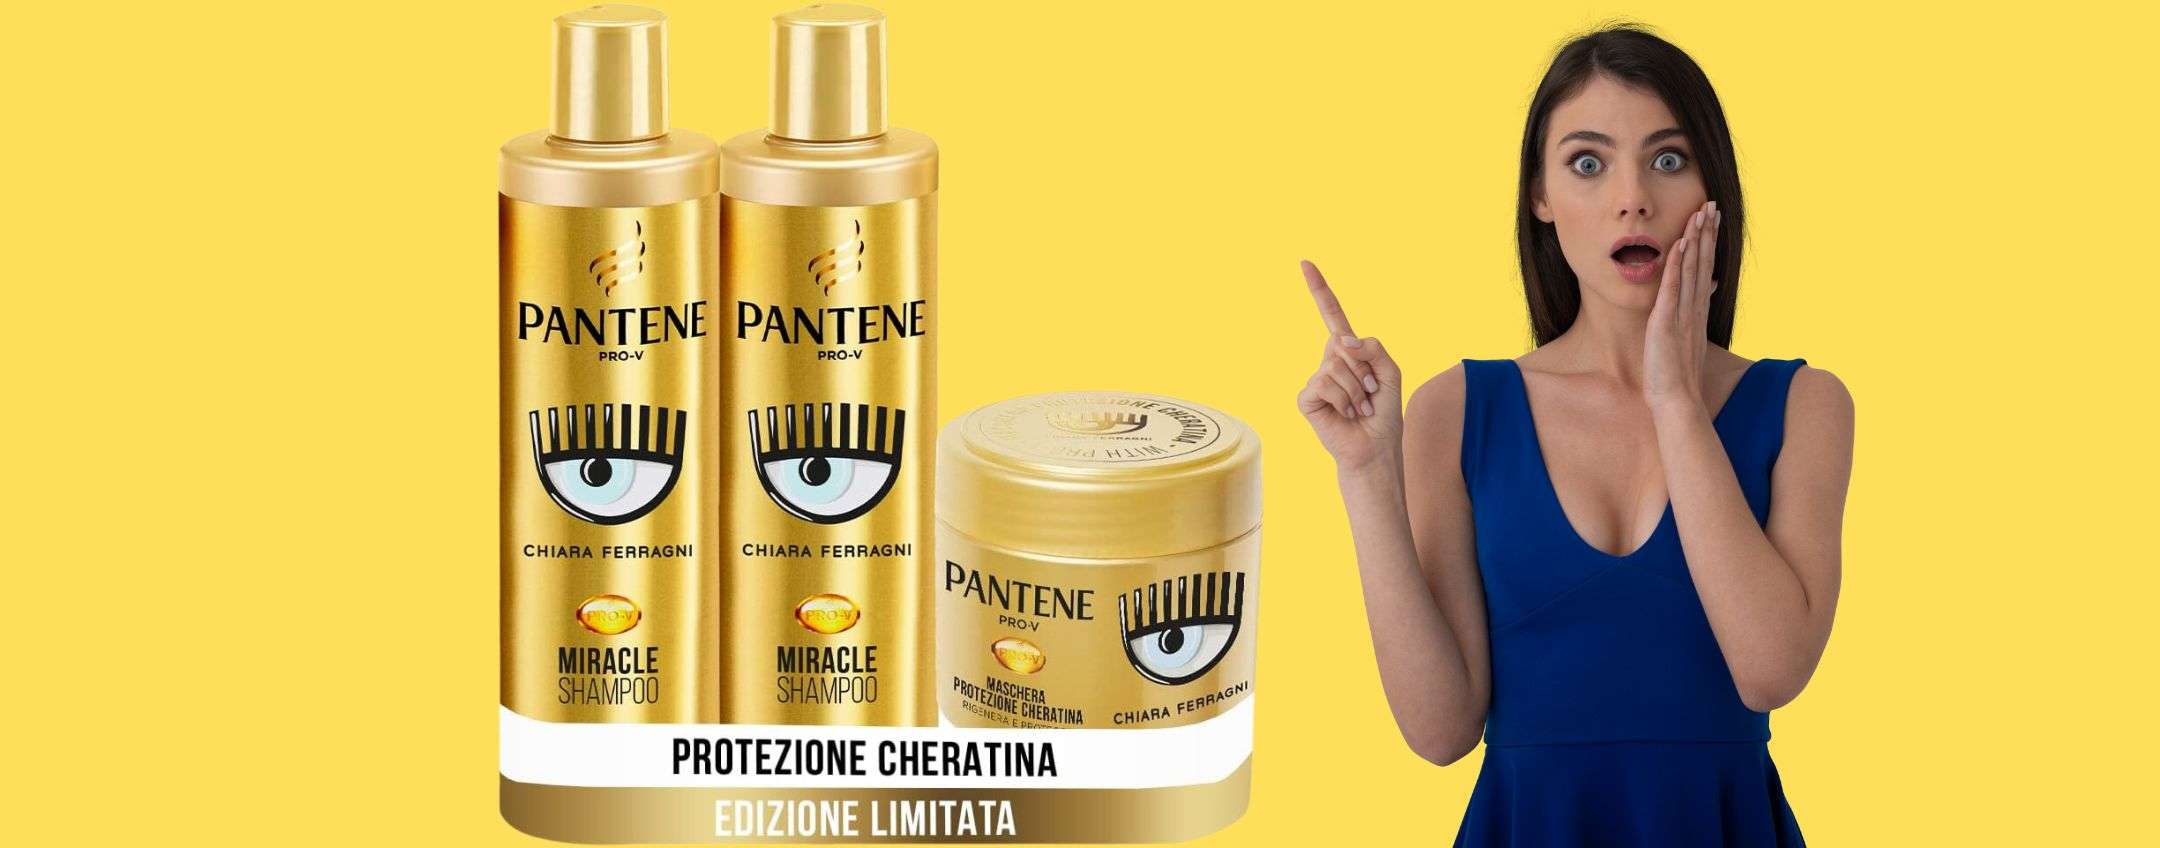  Pantene-Pro-V-by-Chiara-Ferragni-Miracle-Shampoo-a-soli-8-75-offerta-incredibile-Amazon